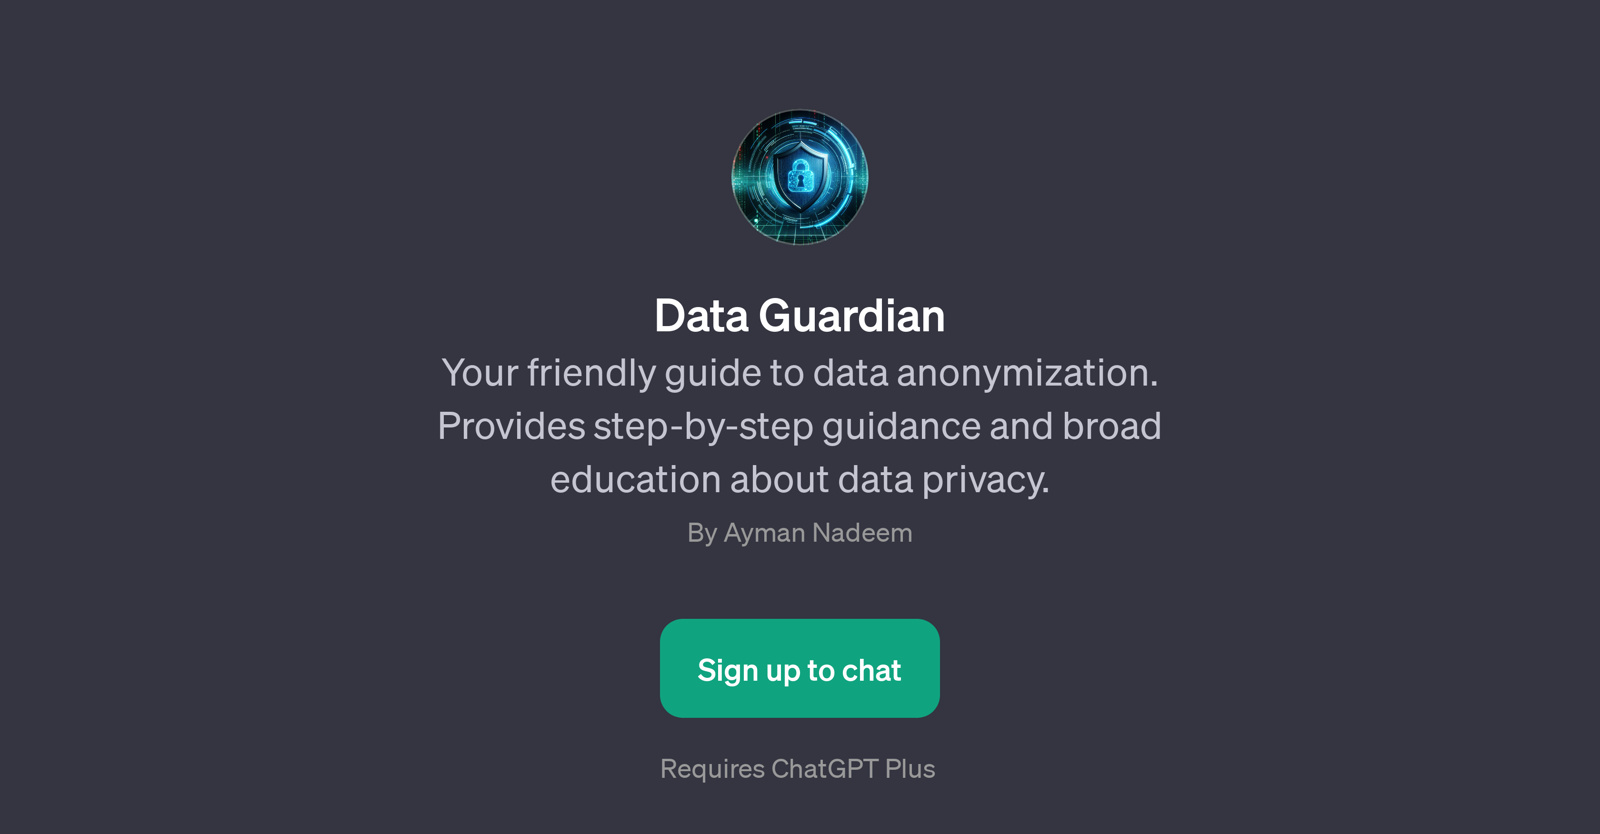 Data Guardian website